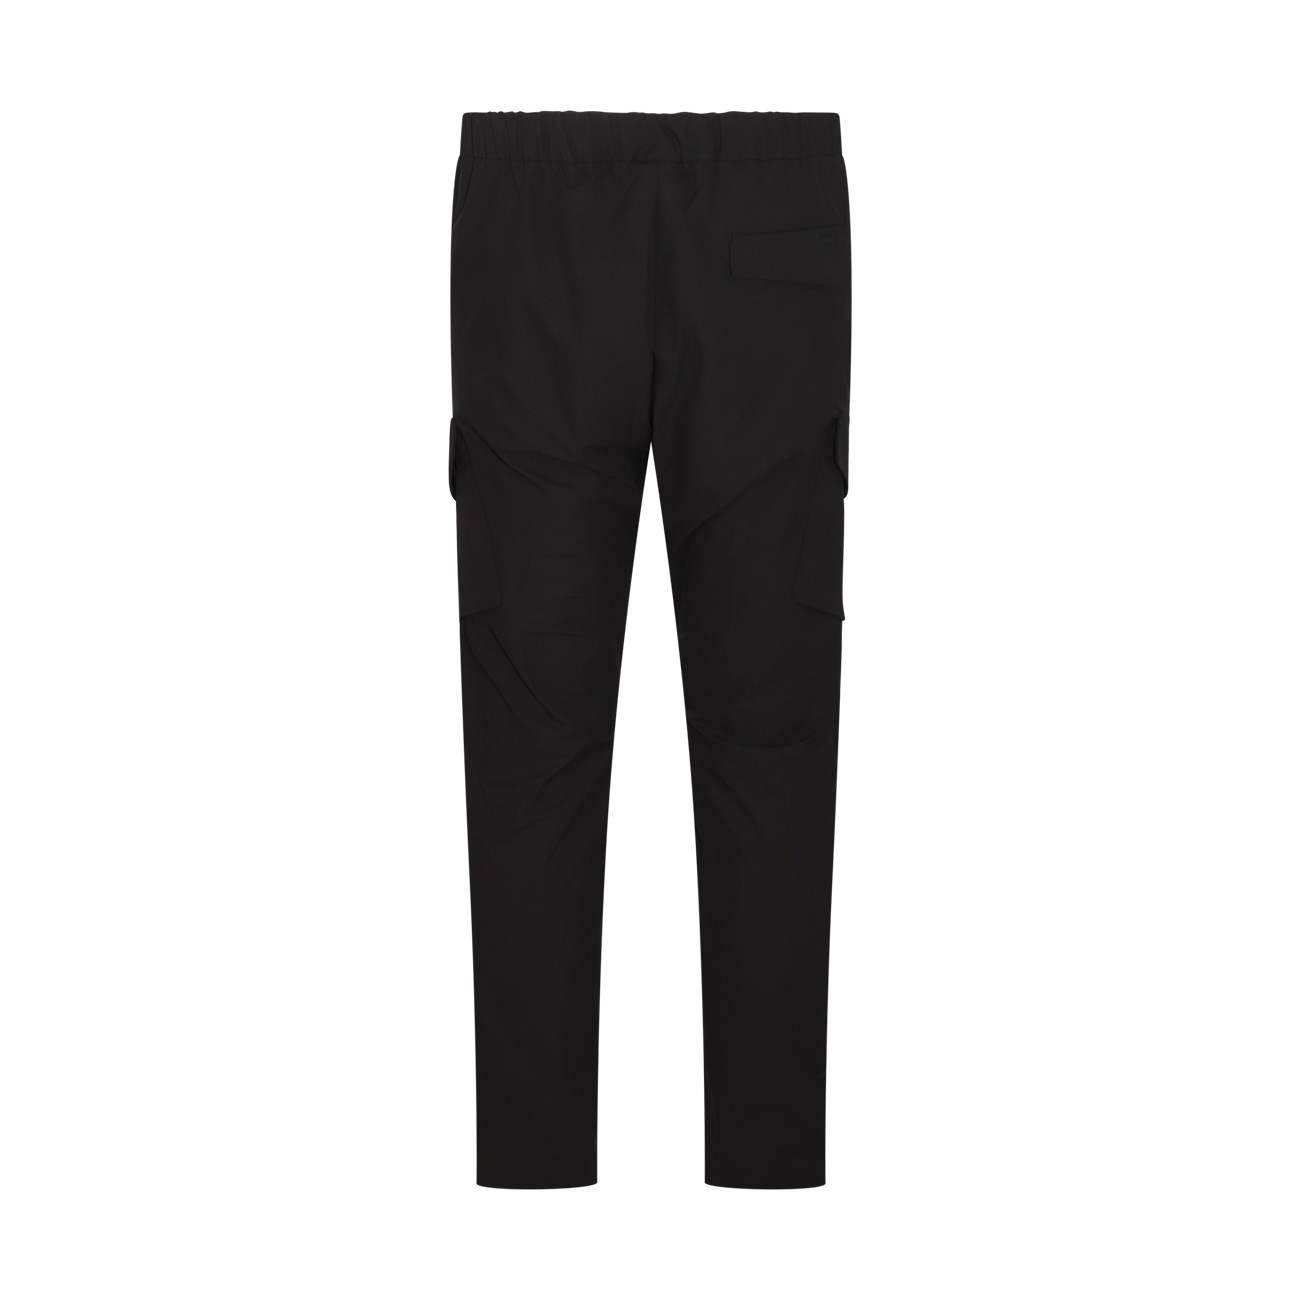 black nylon pants - 2